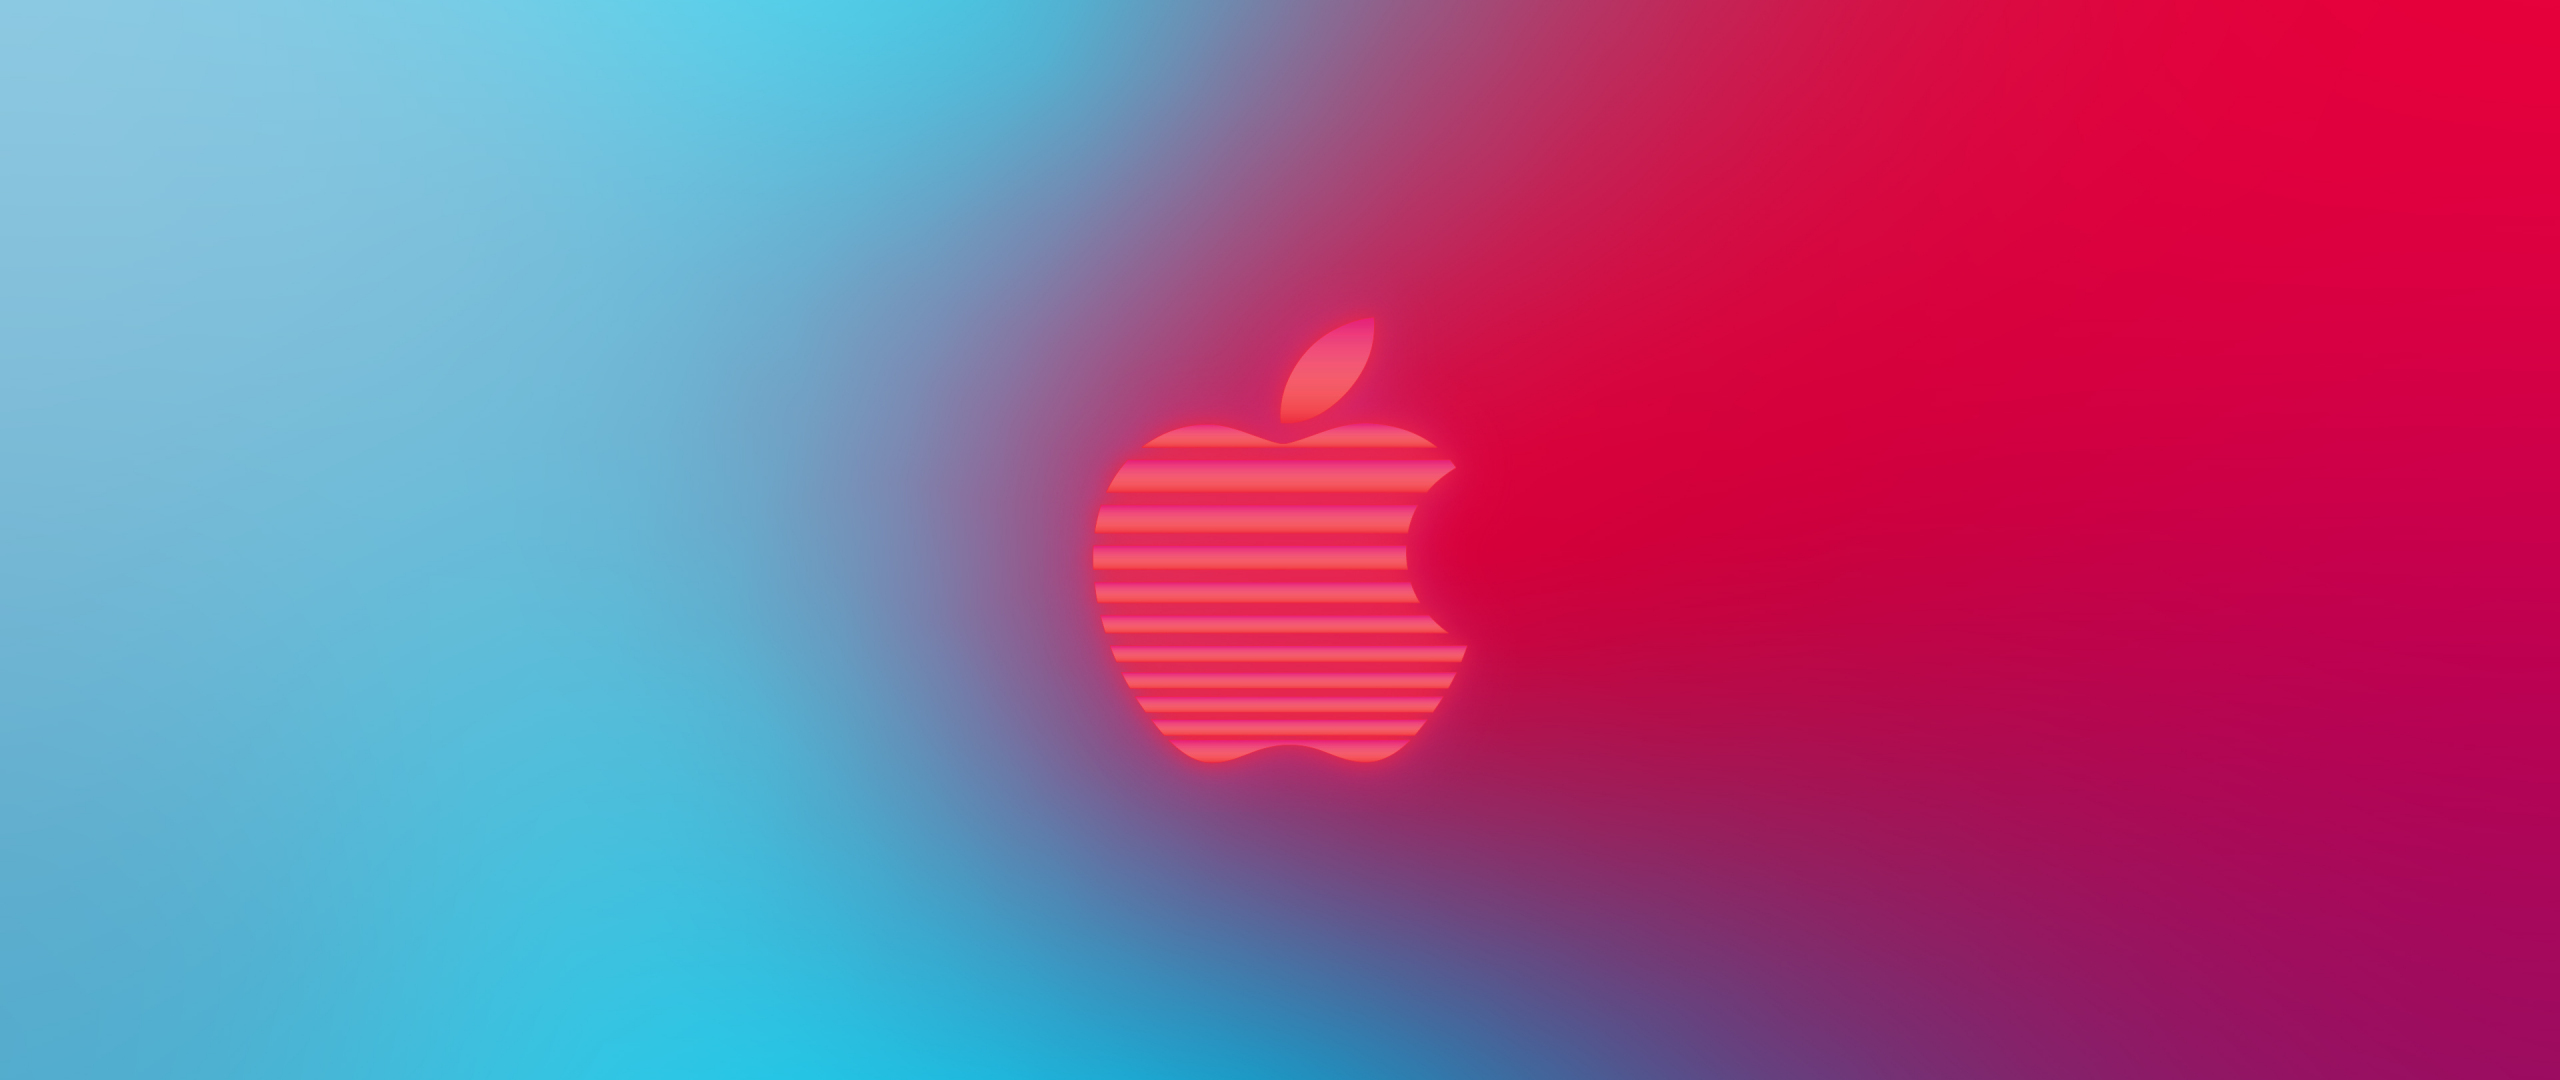 Download wallpaper 2560x1080 mac apple logo, abstract, minimal, dual ...